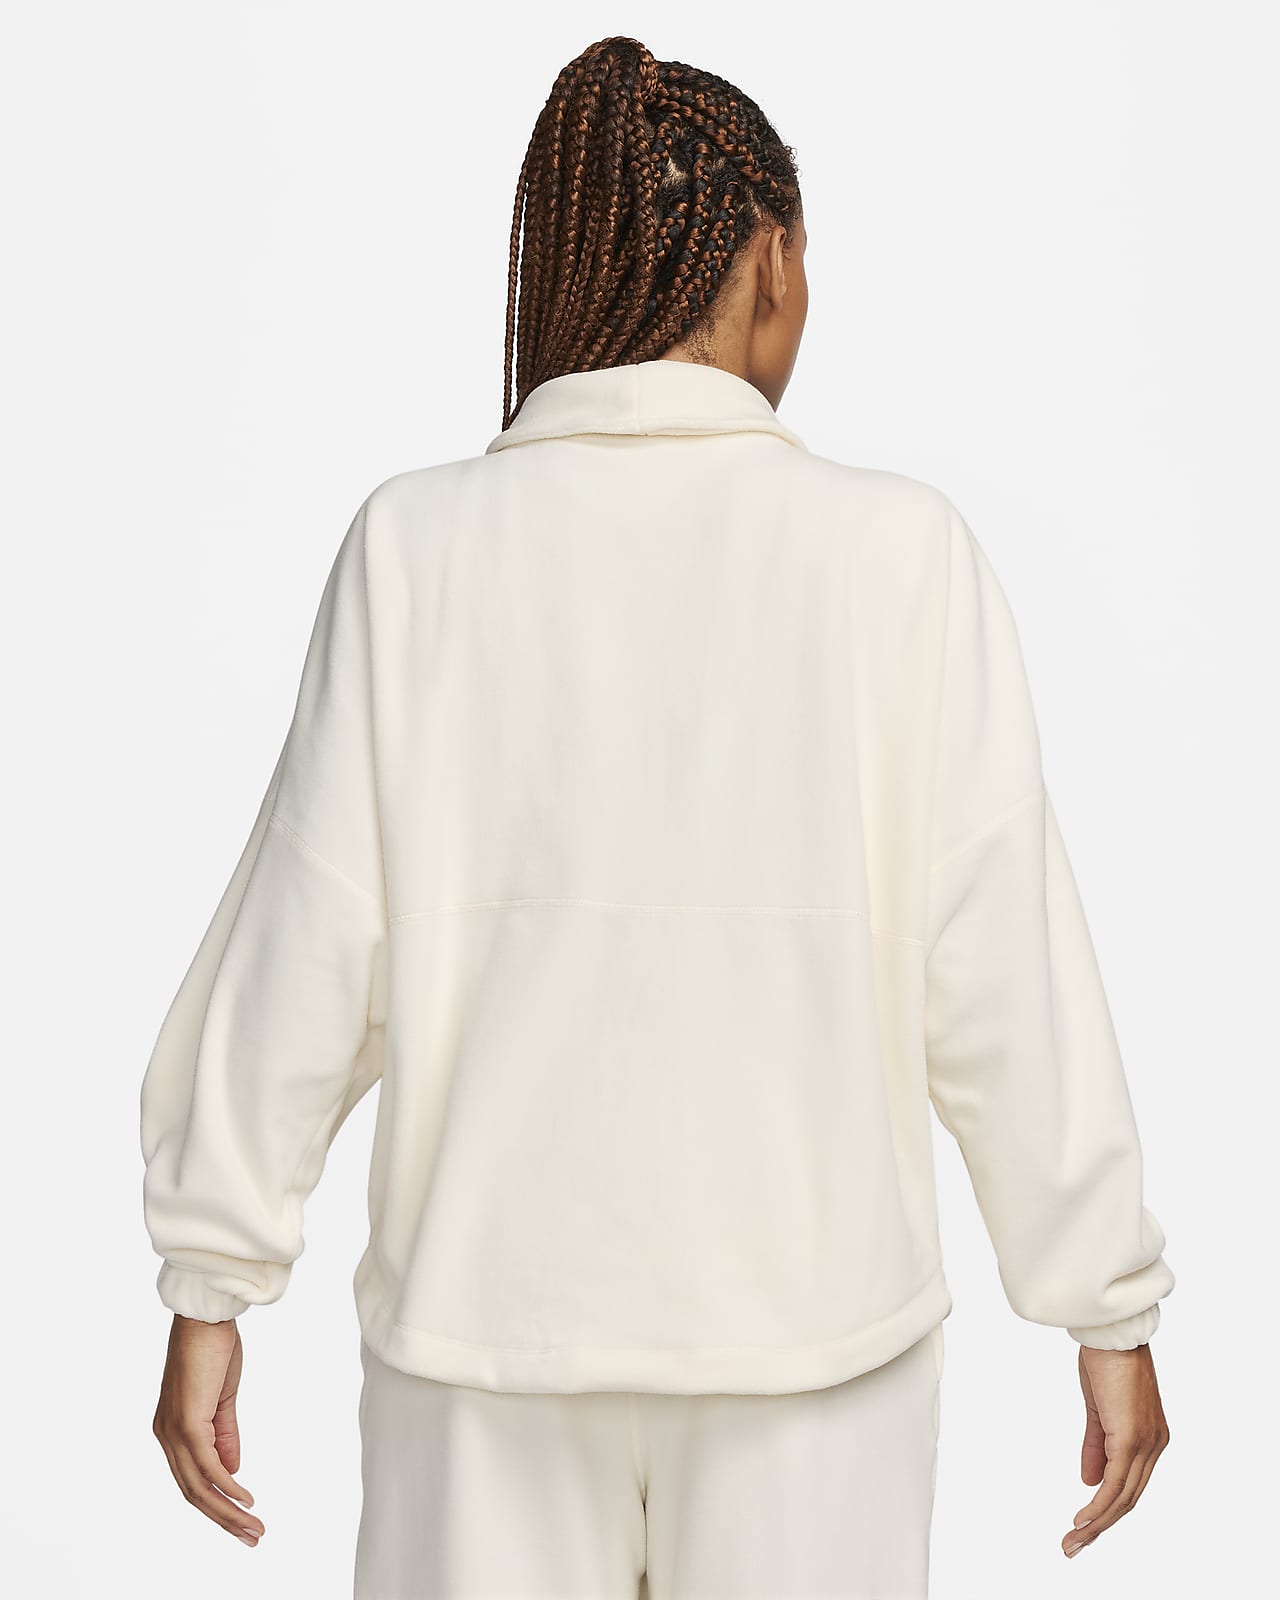 Nike Therma-FIT One Women's Oversized Long-Sleeve Fleece Top. Nike CA